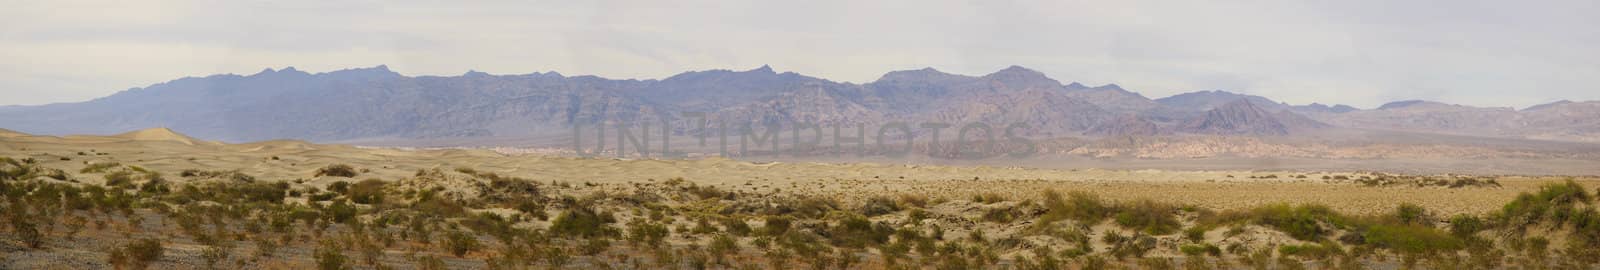 desert scenic of Death Valley panorama near mesquite dunes